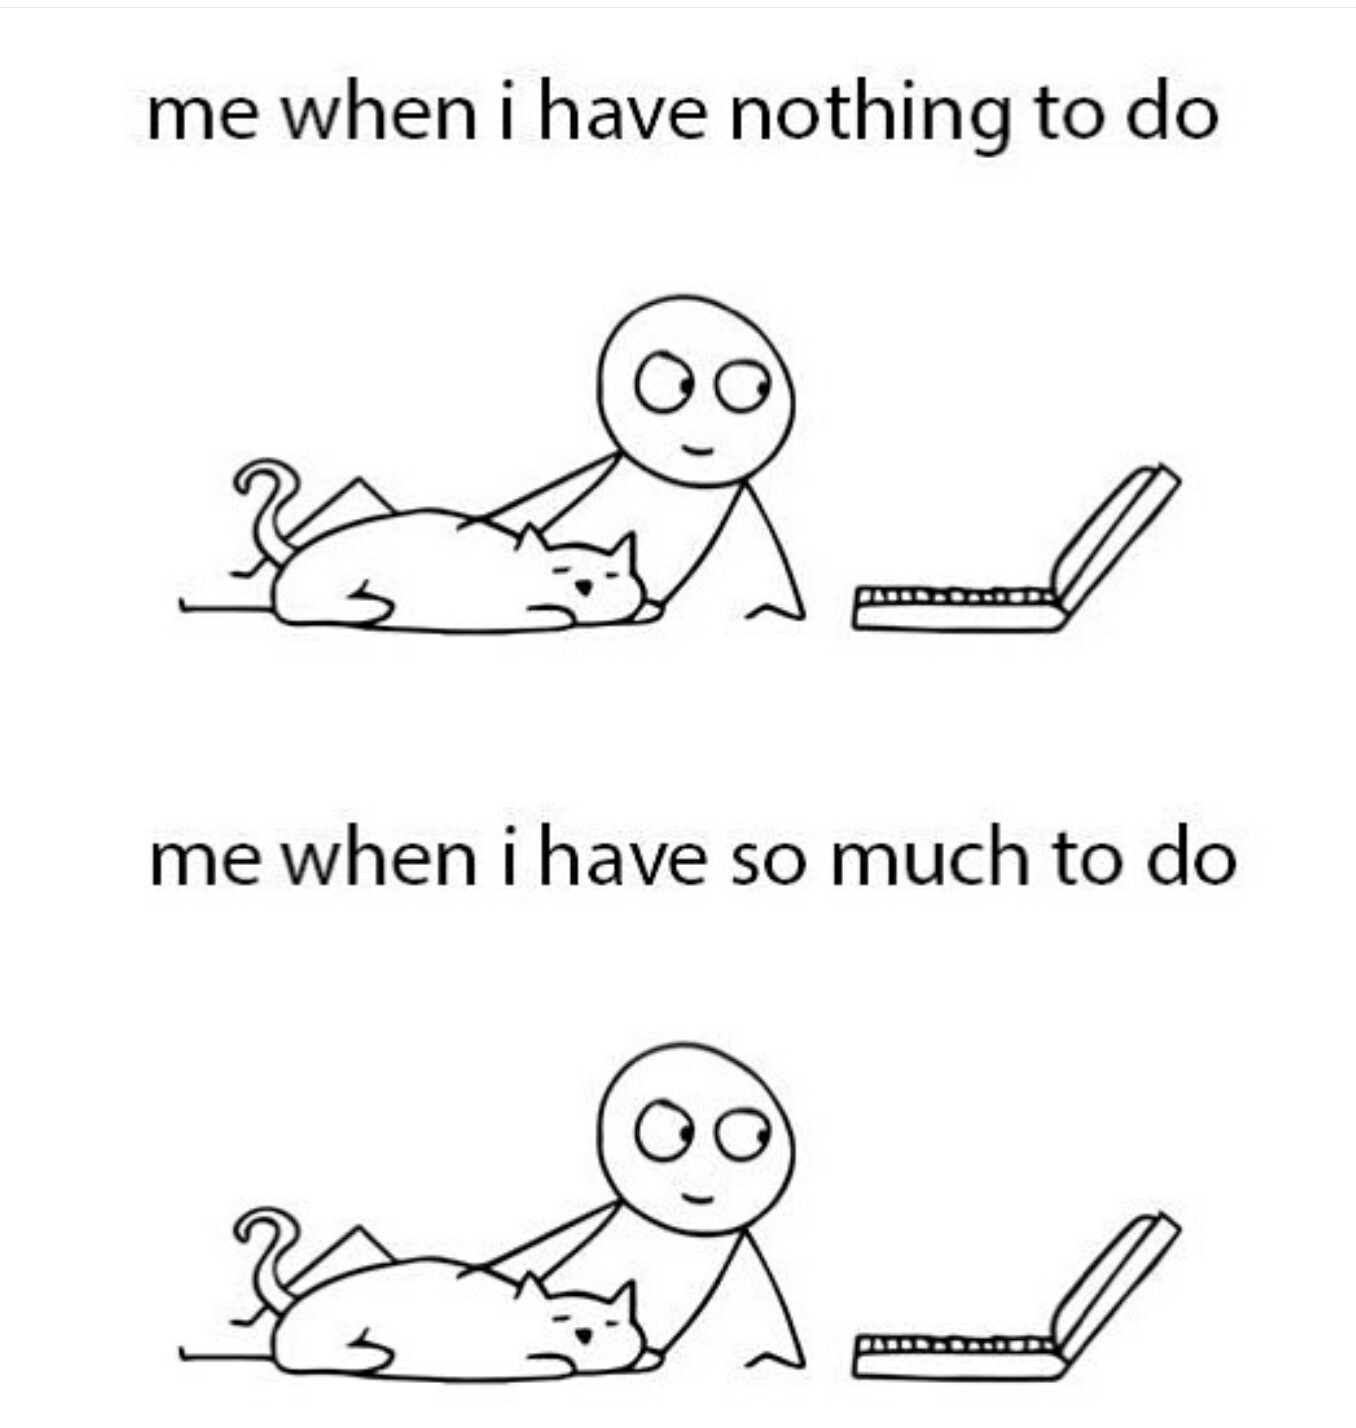 Procrastination stations people! - meme